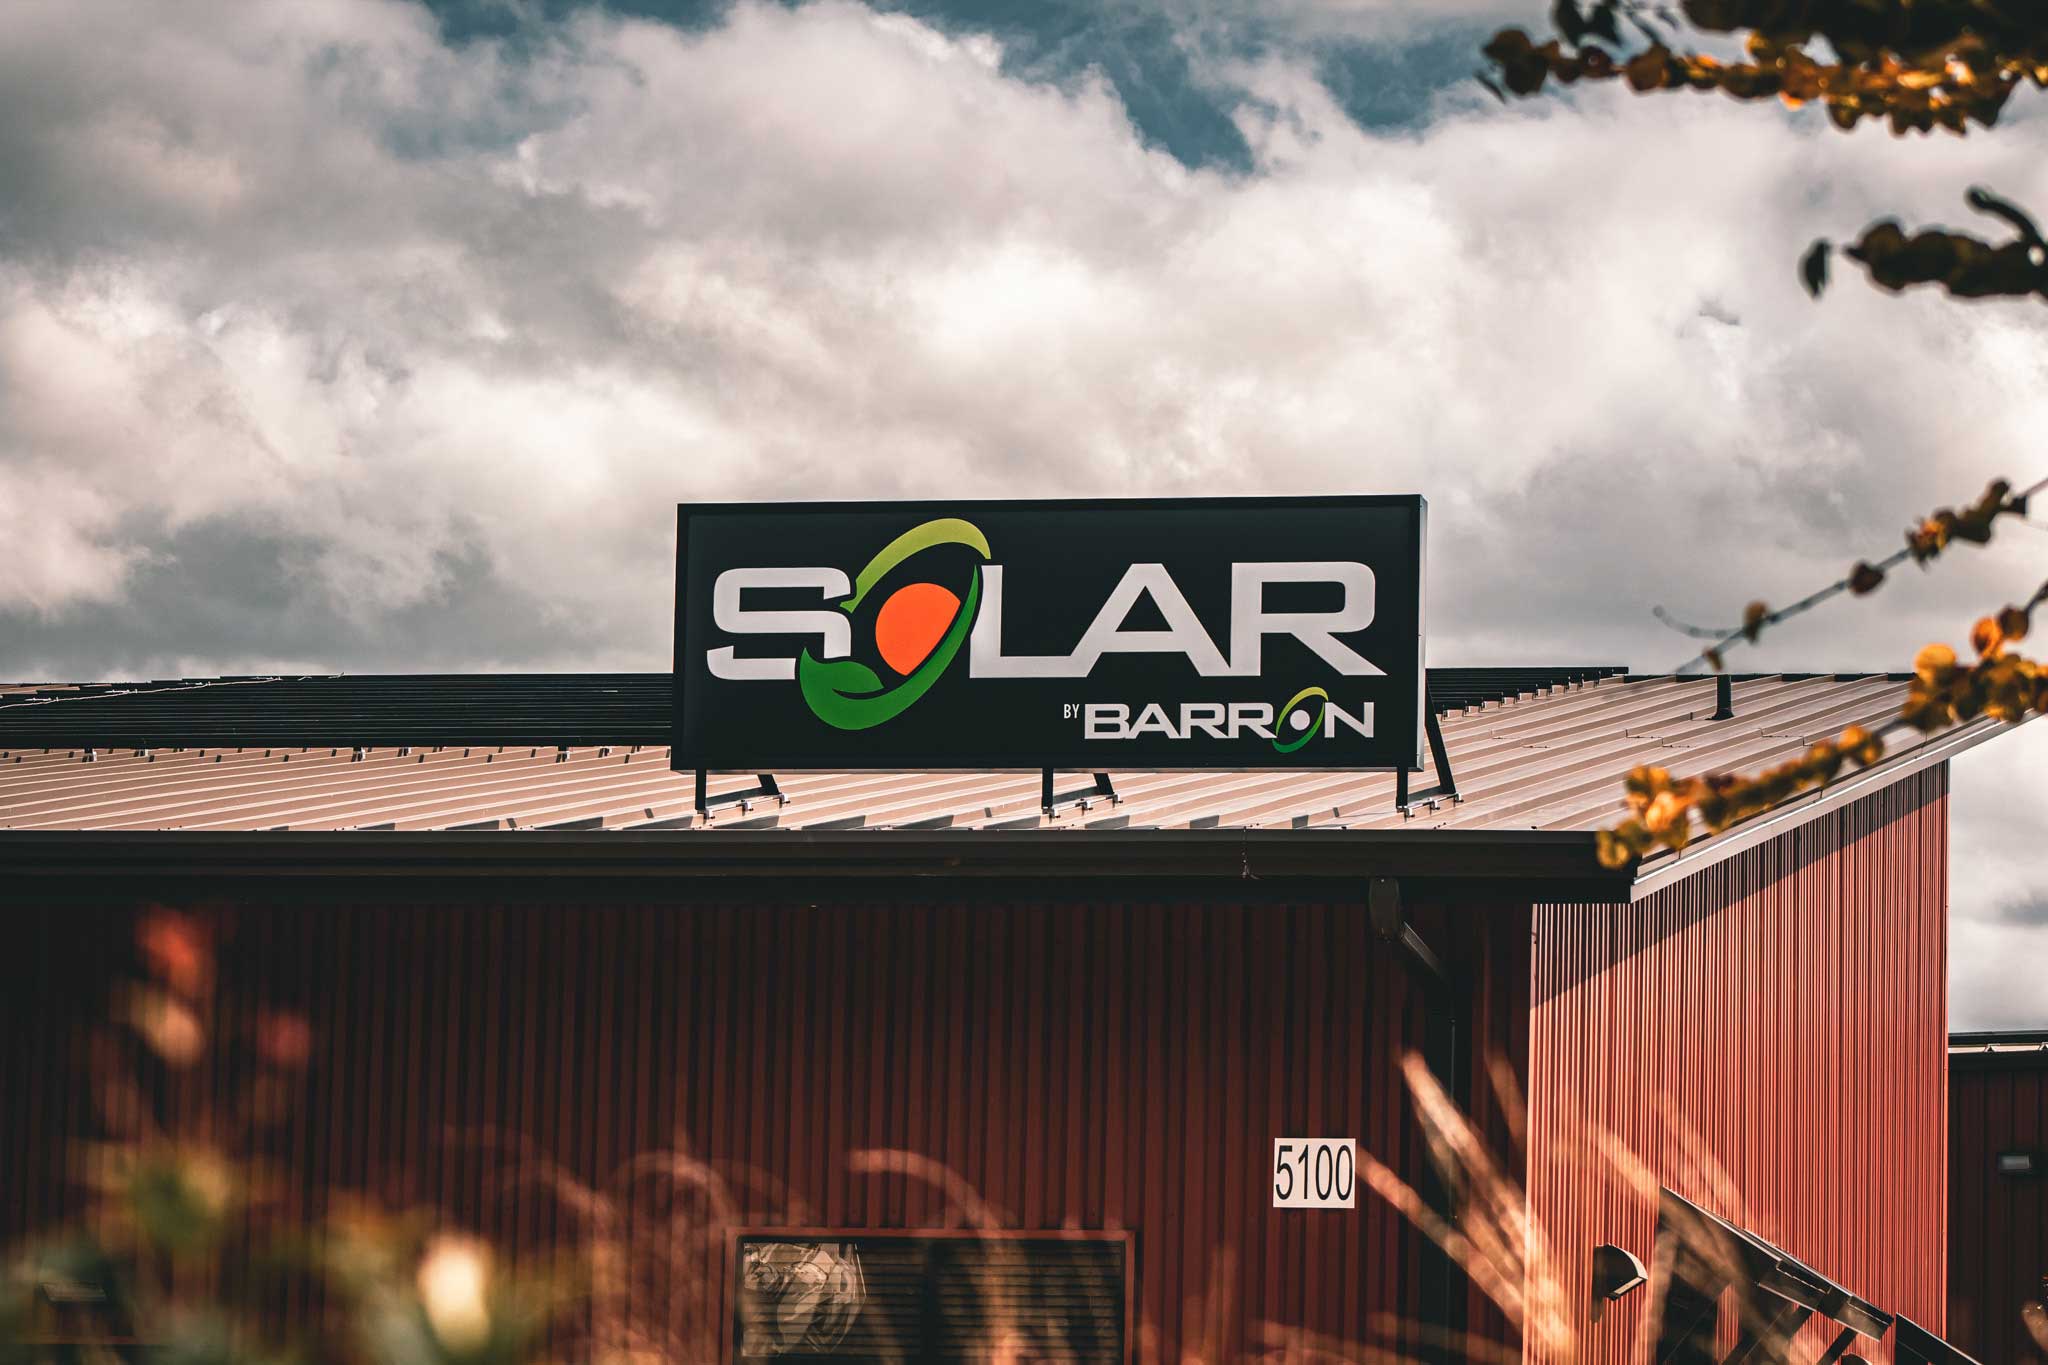 energy-barron-heating-solar-rooftop-sign